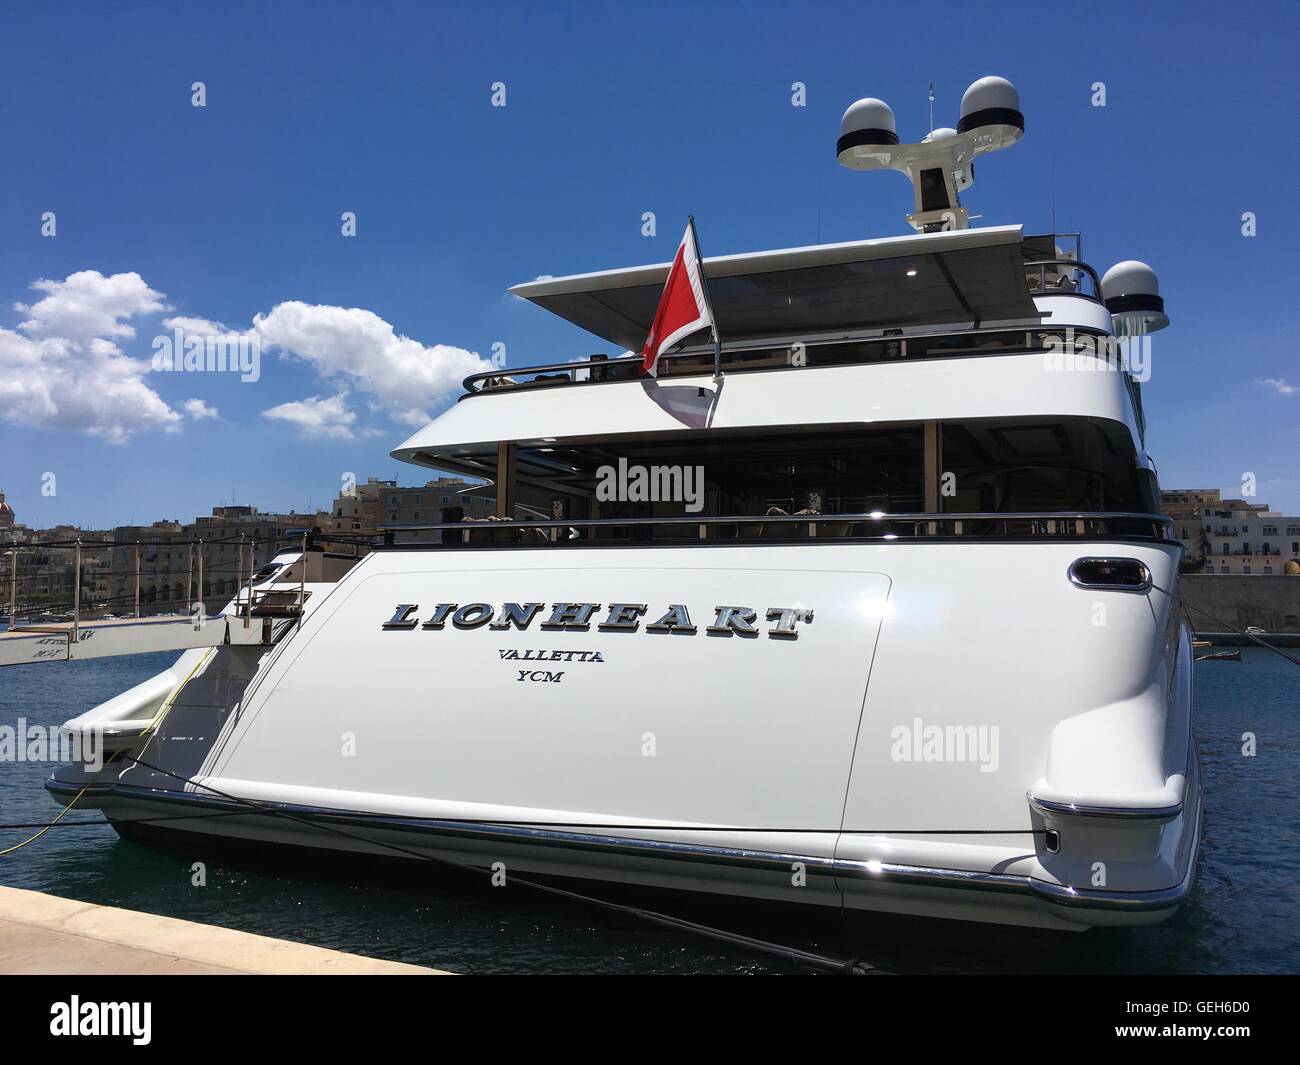 lionheart yacht current owner